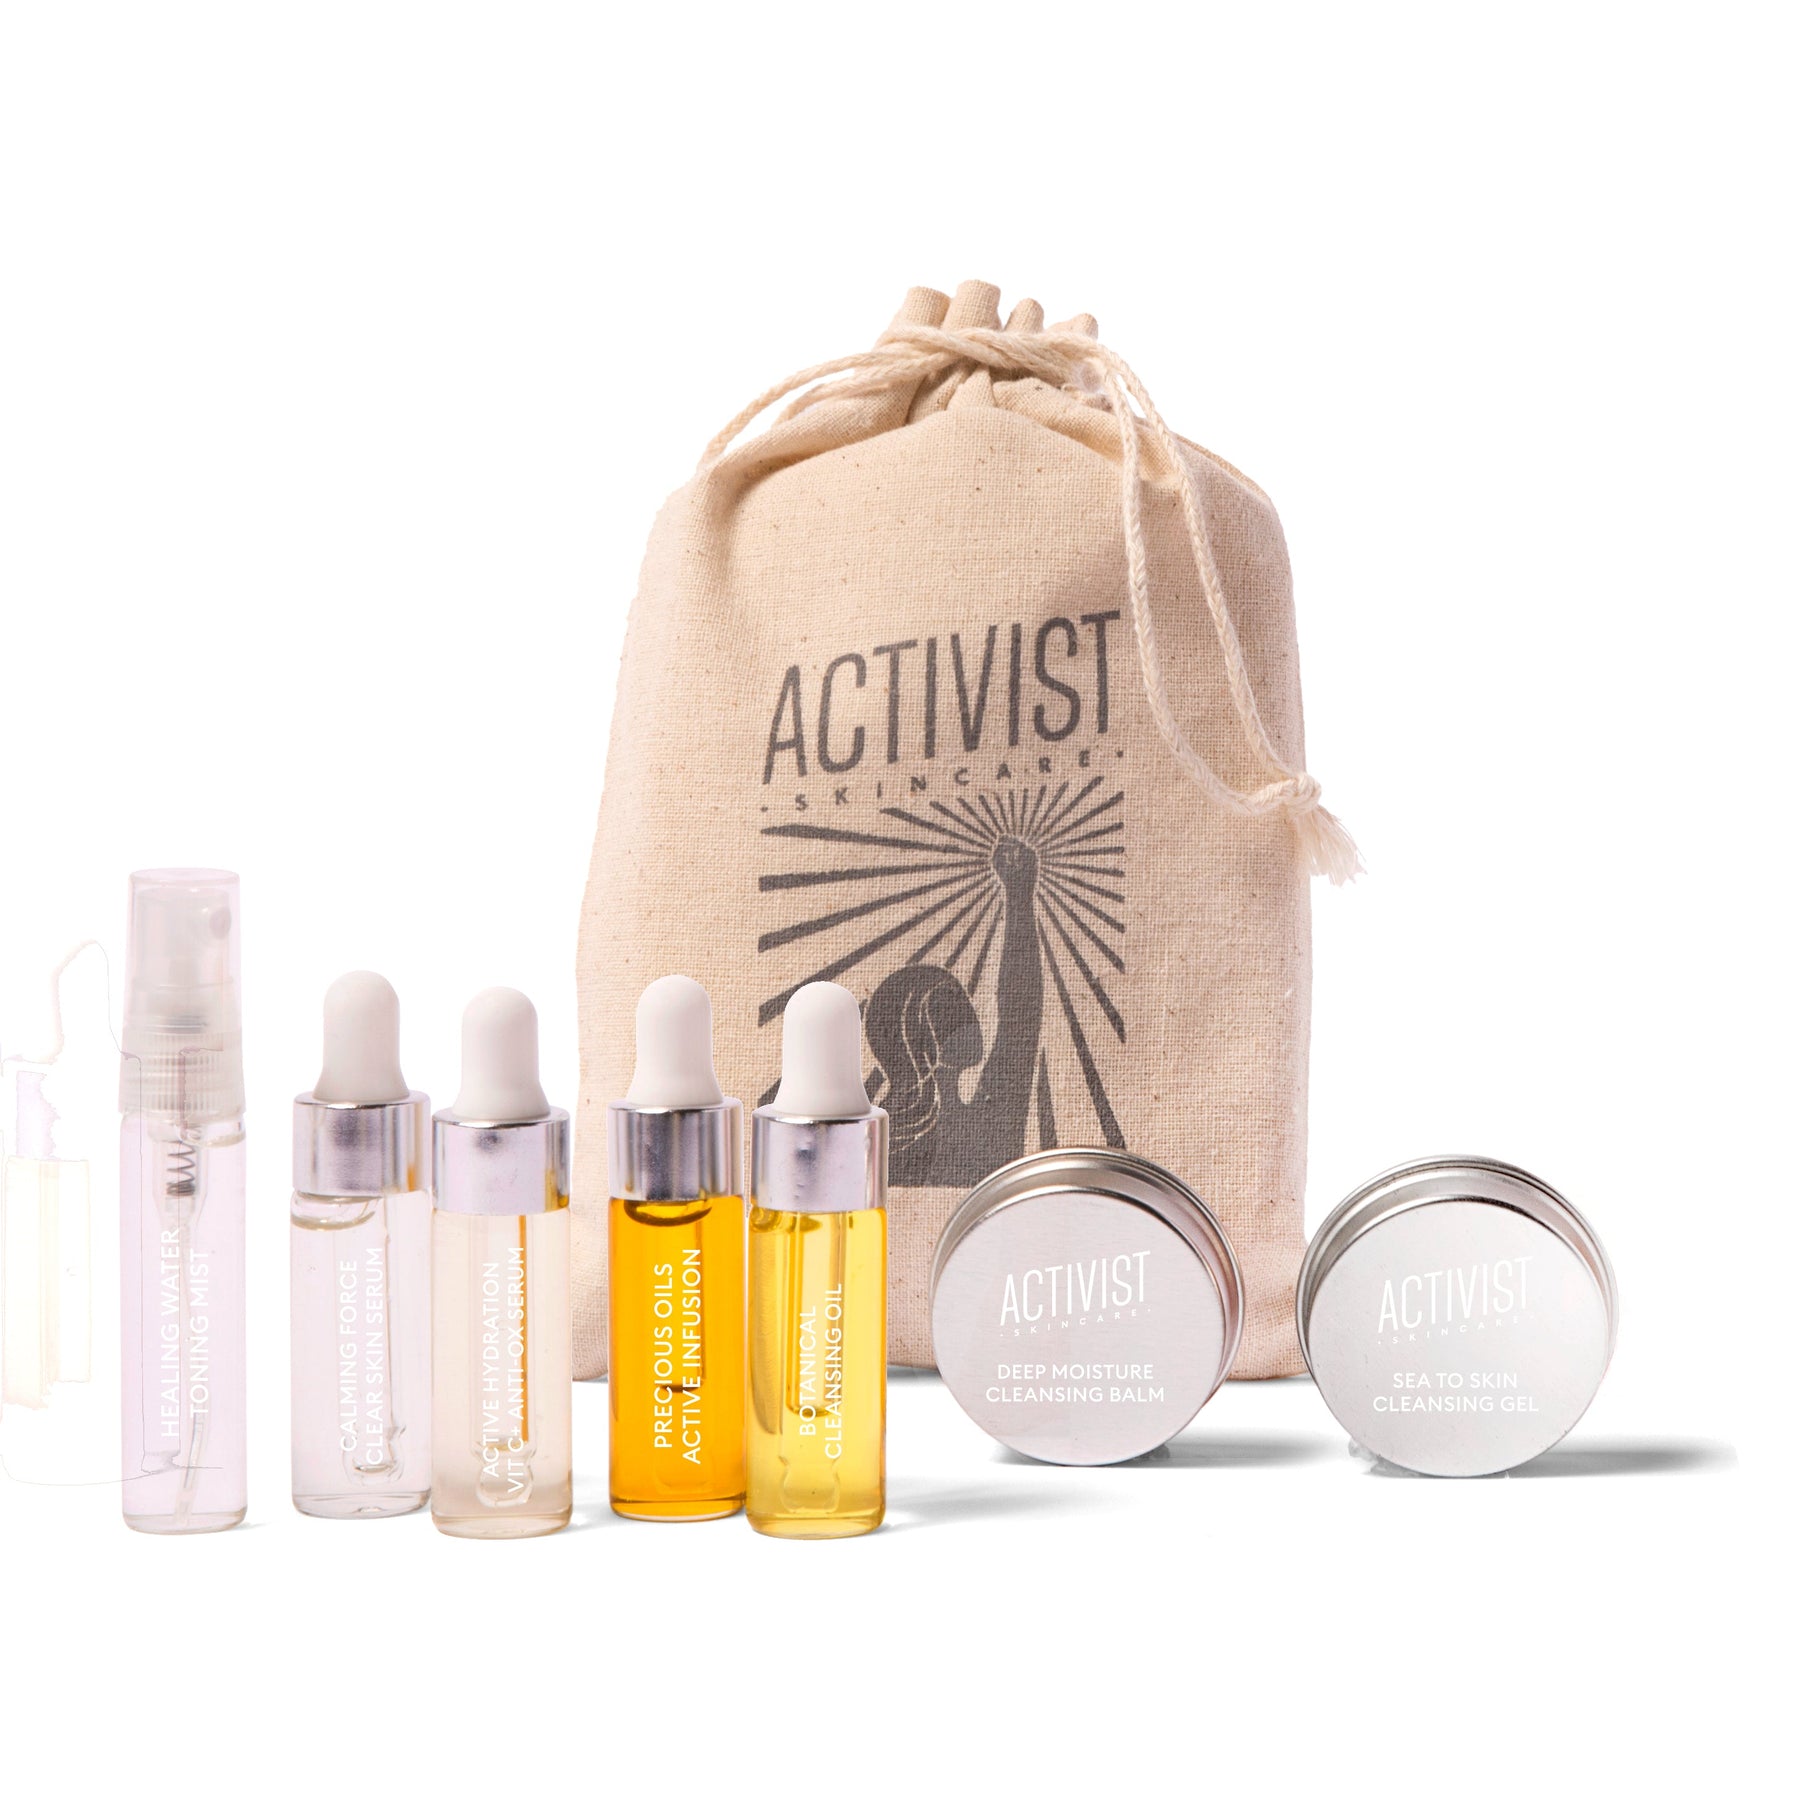 Activist Skincare Refillable Trial & Travel Kit